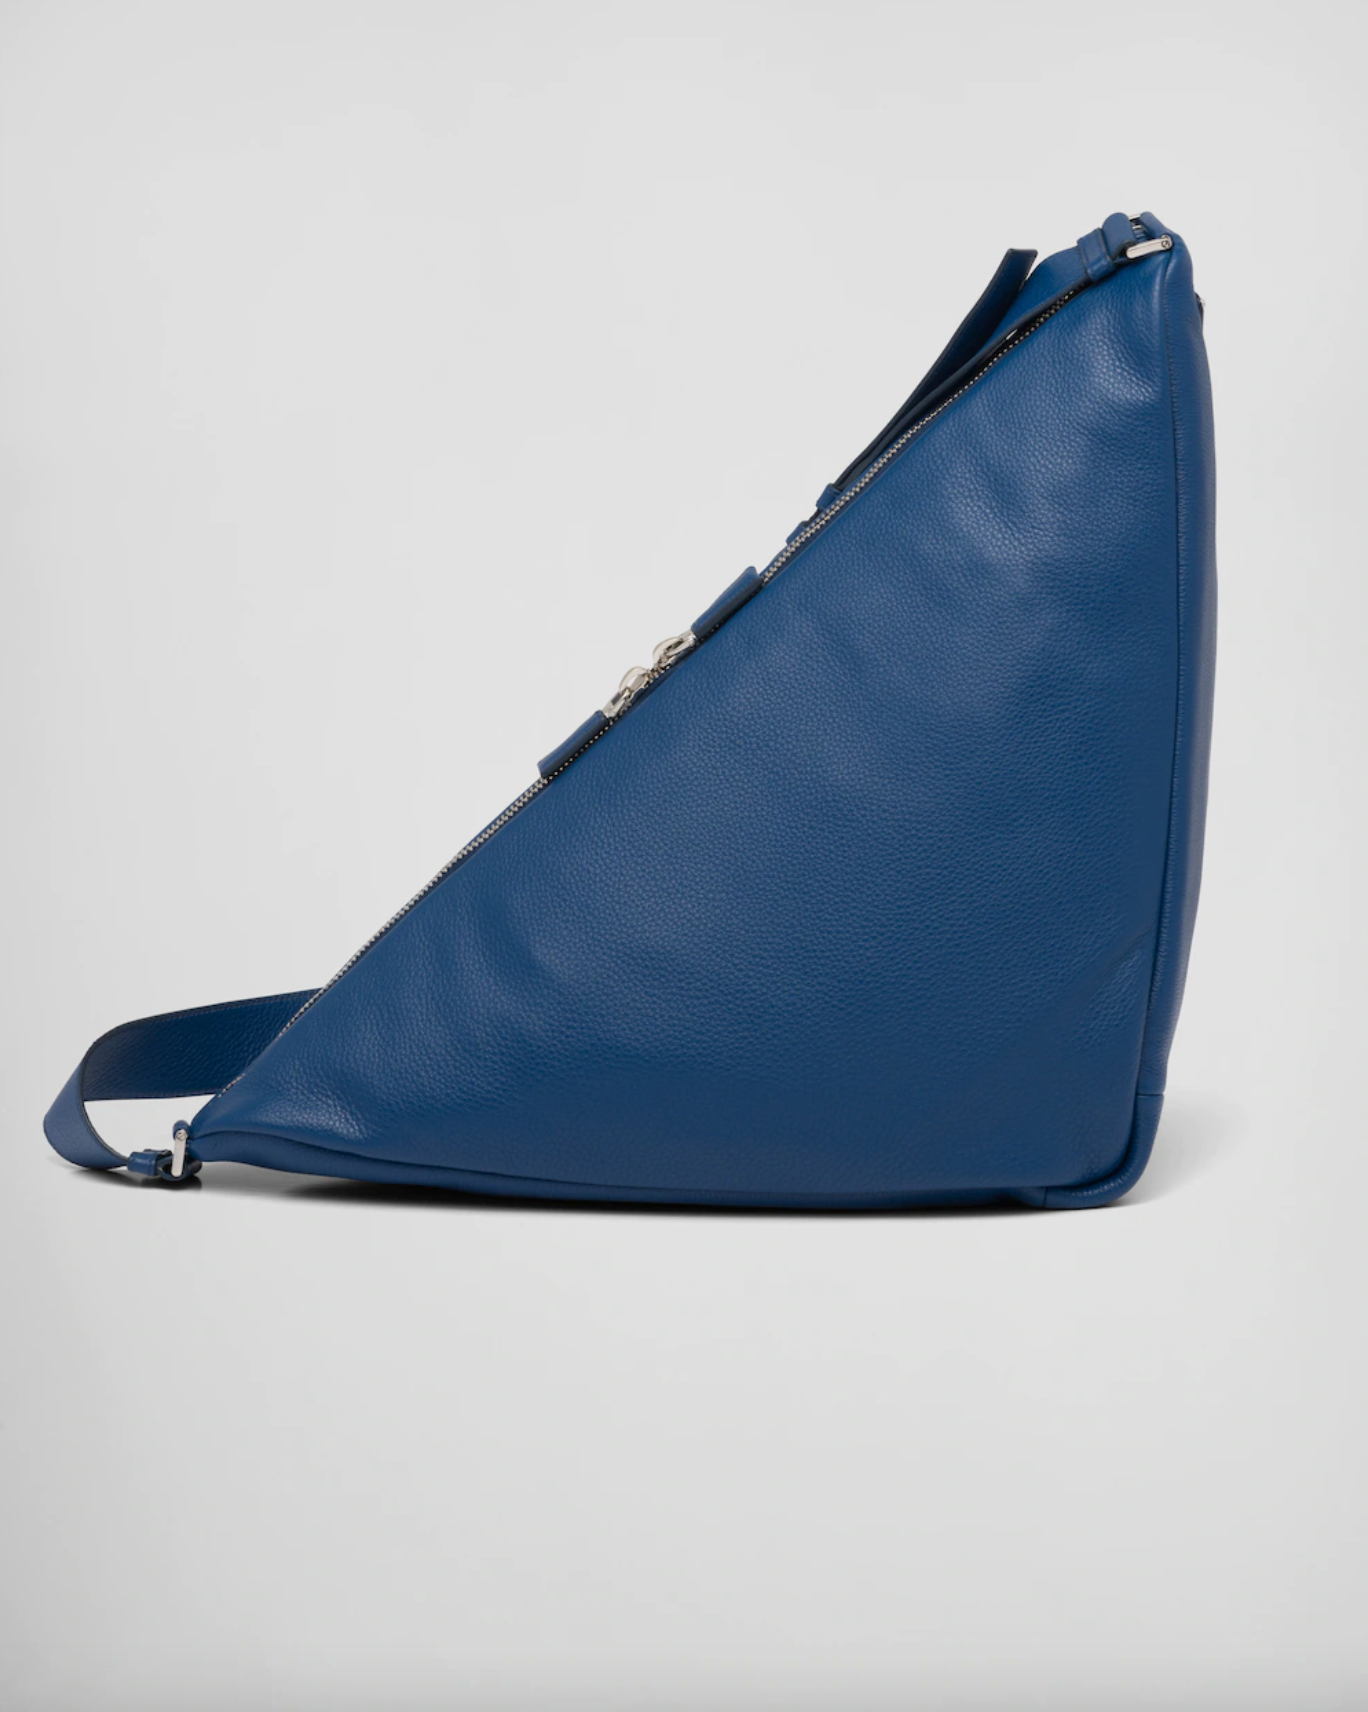 LUXURY PRADA SAFFIANO BAG HANDBAG 1BB095 BLUE LEATHER NEW | eBay